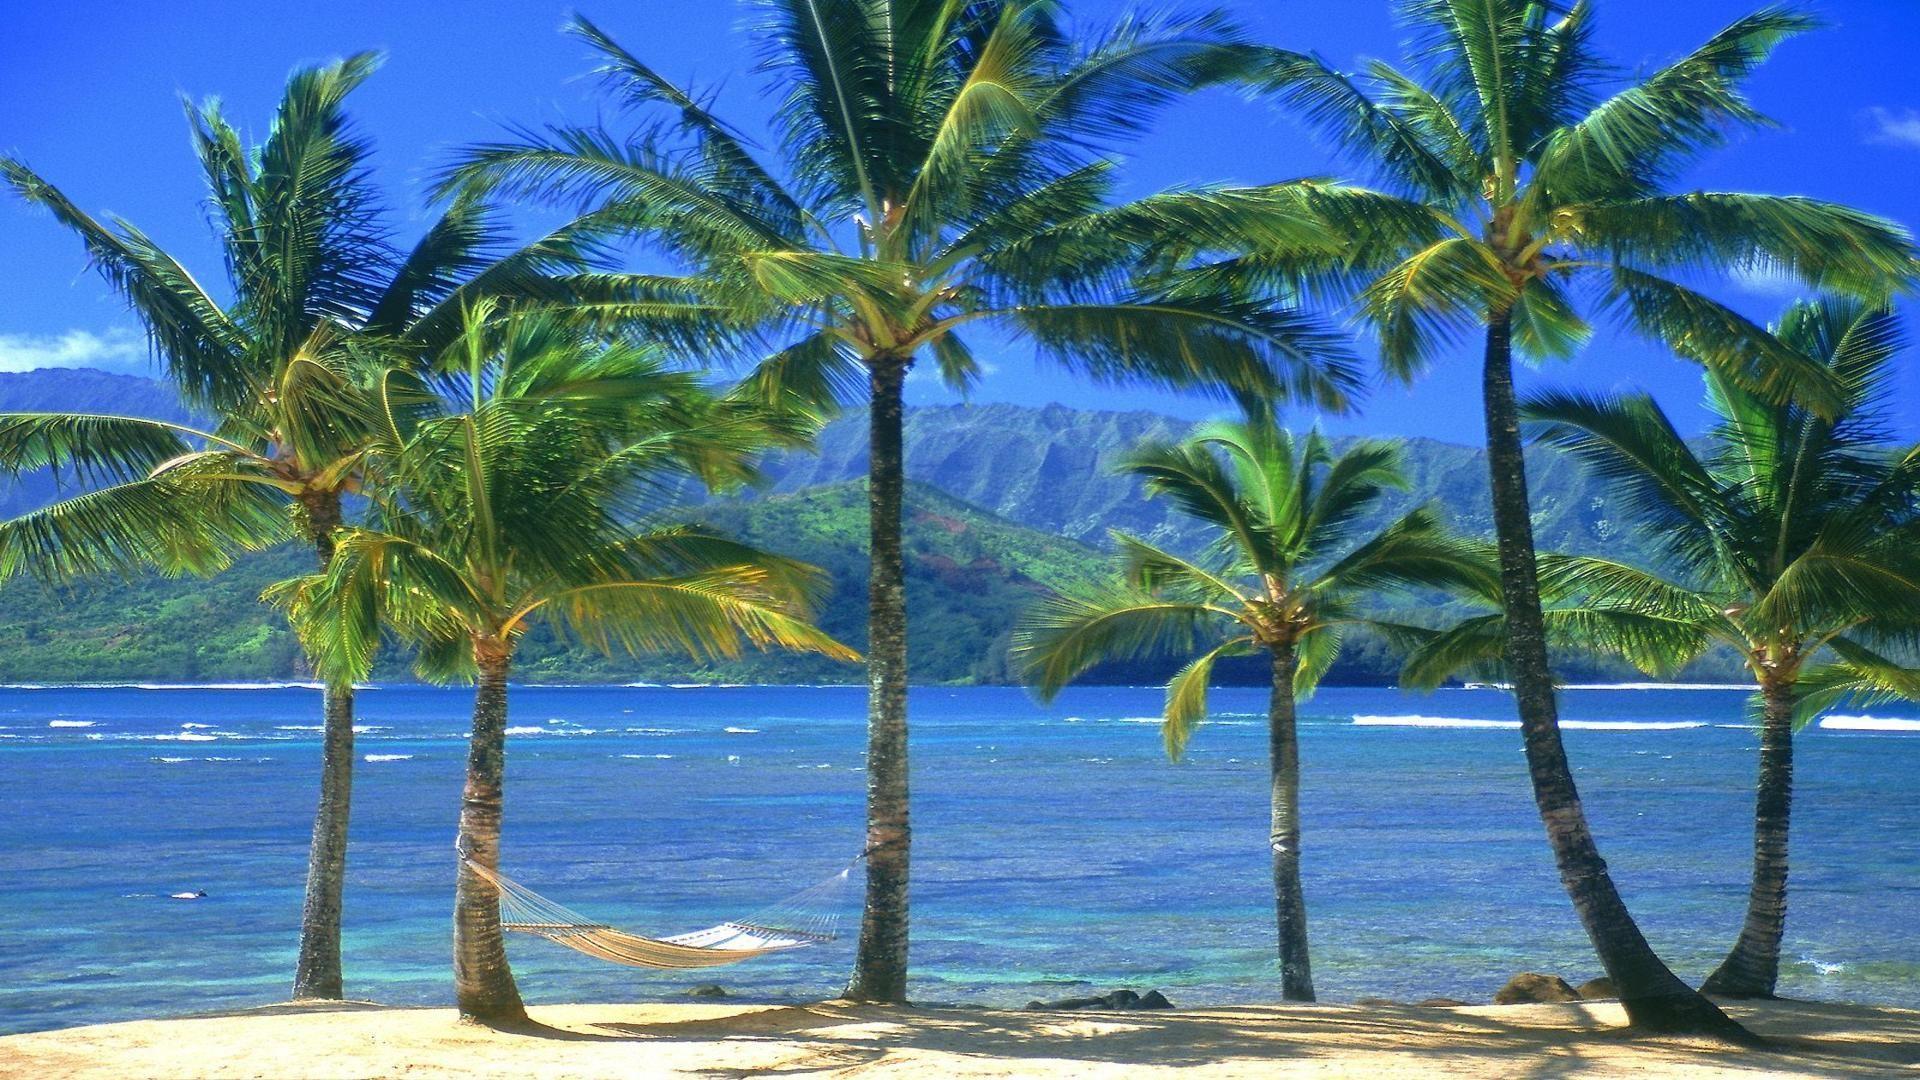 An empty hammock kauai Hawaii free desktop background